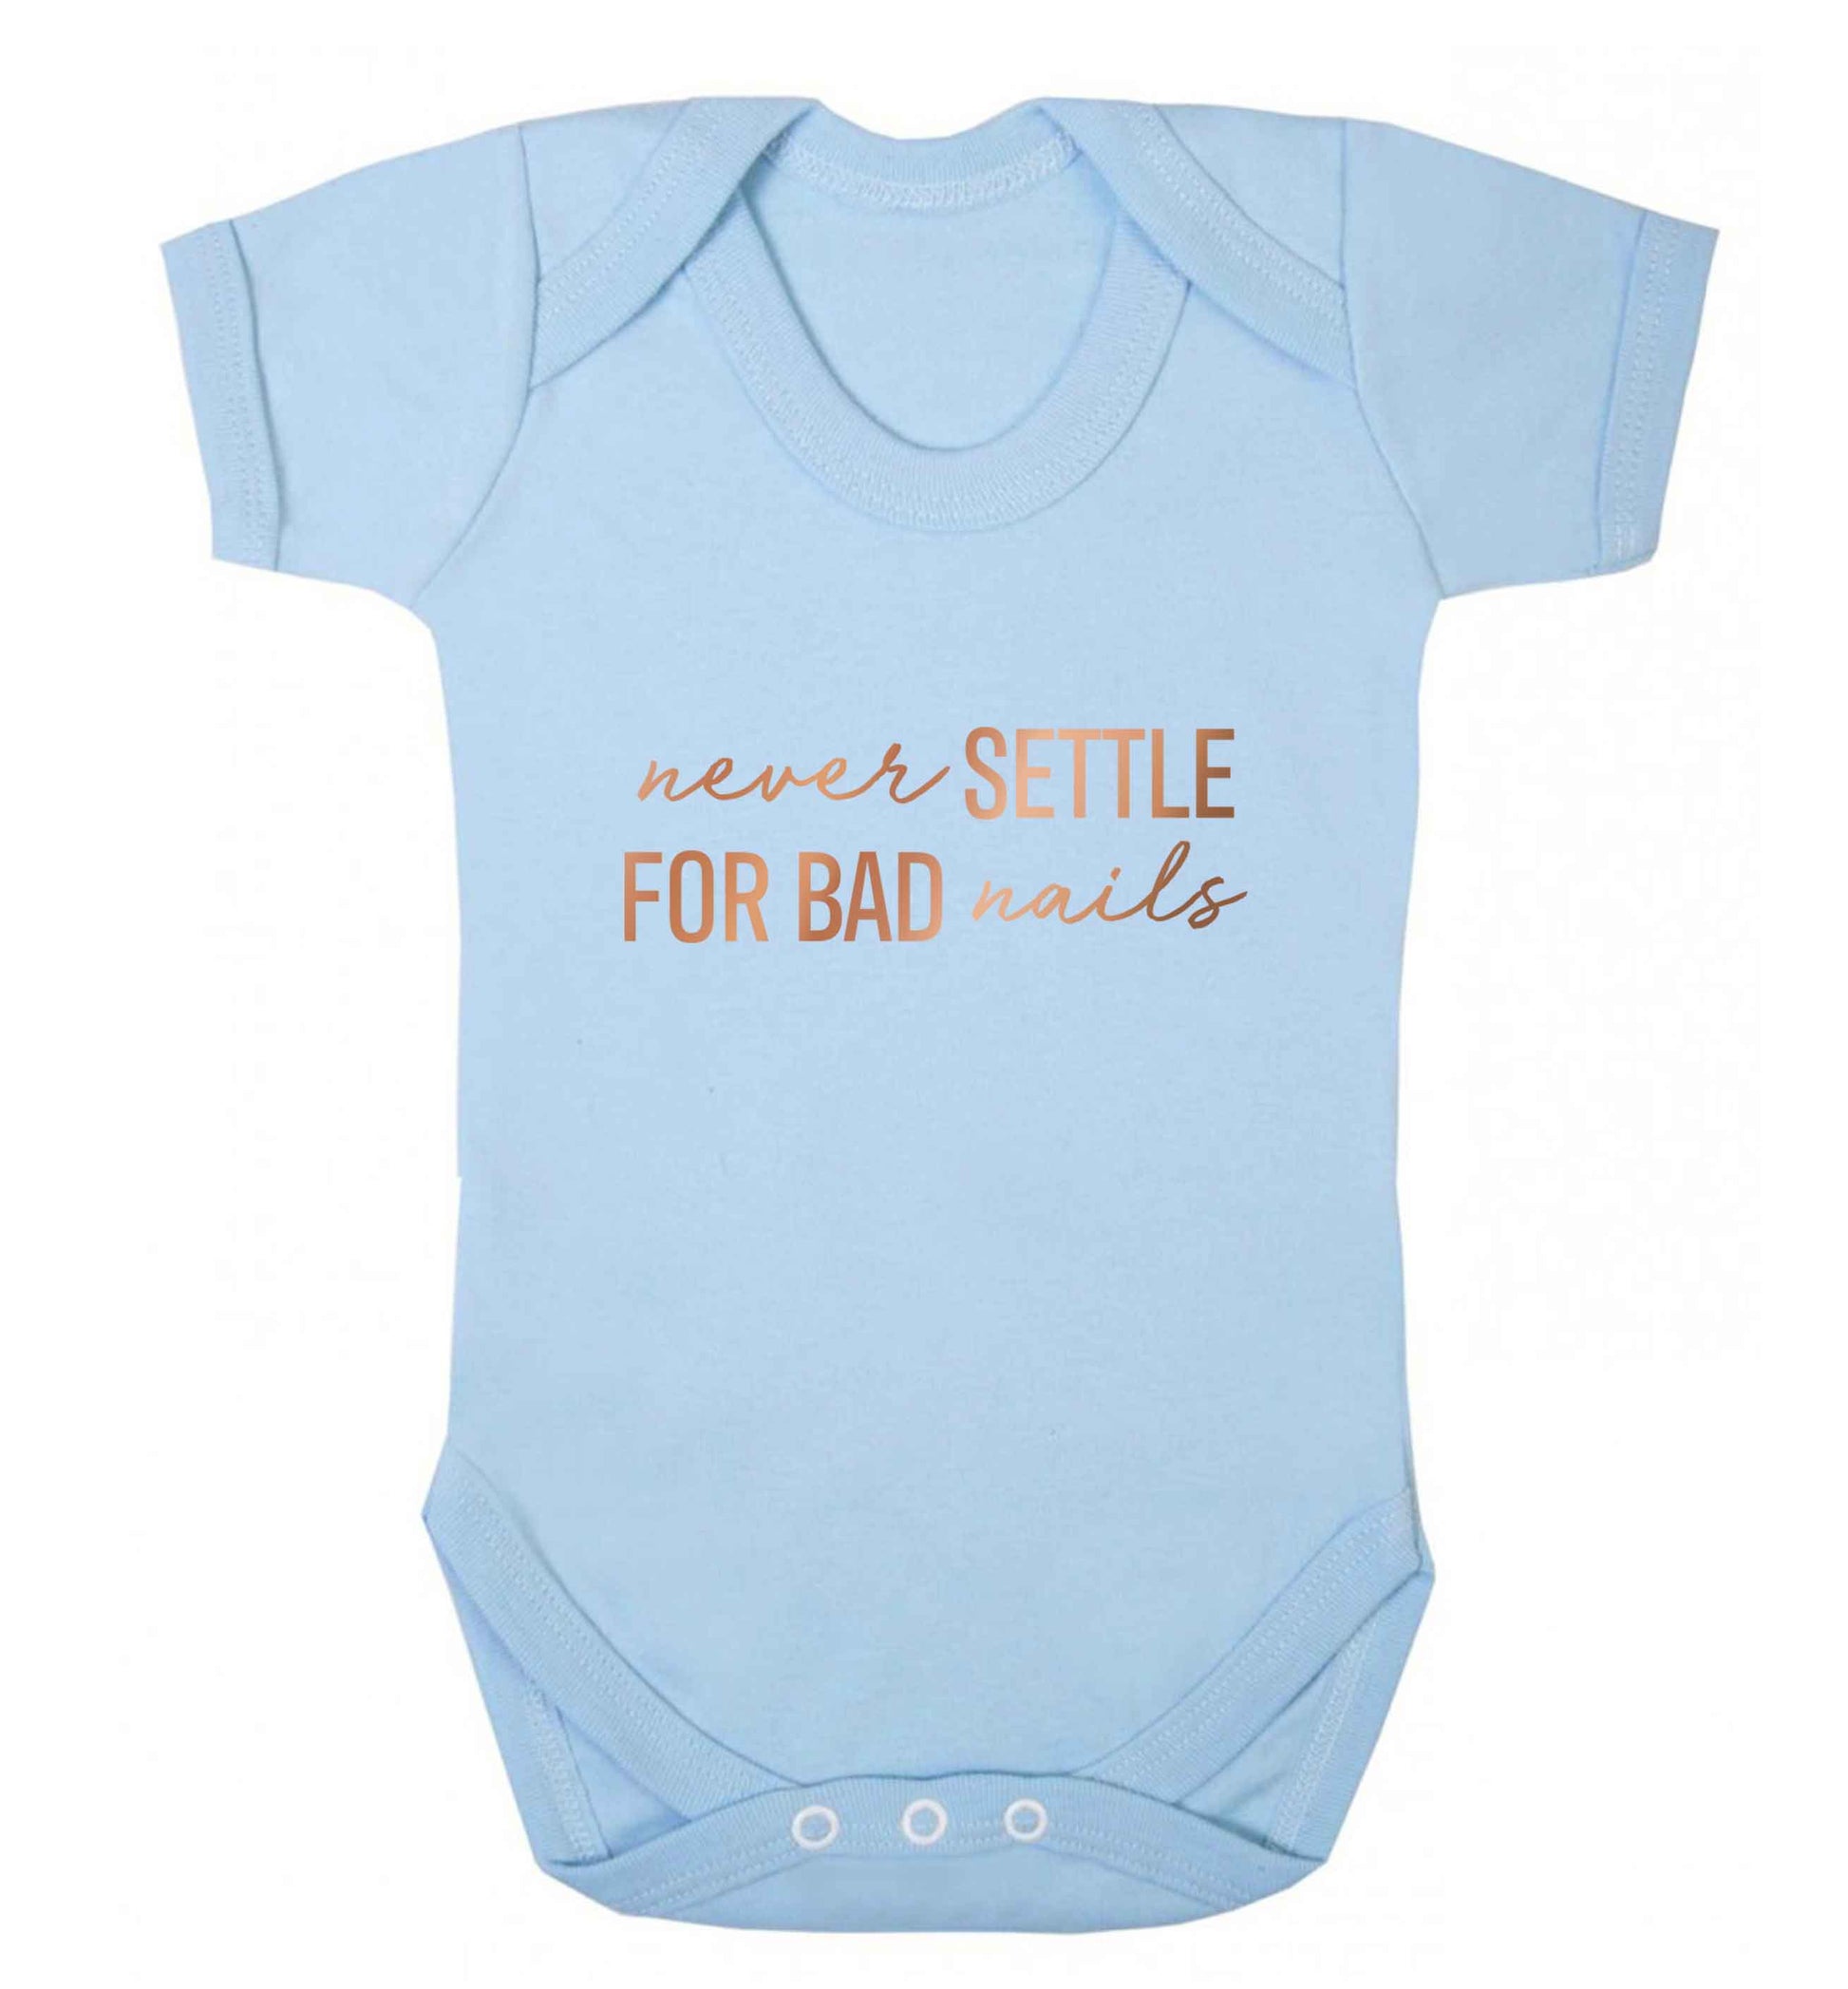 Never settle for bad nails - rose gold baby vest pale blue 18-24 months